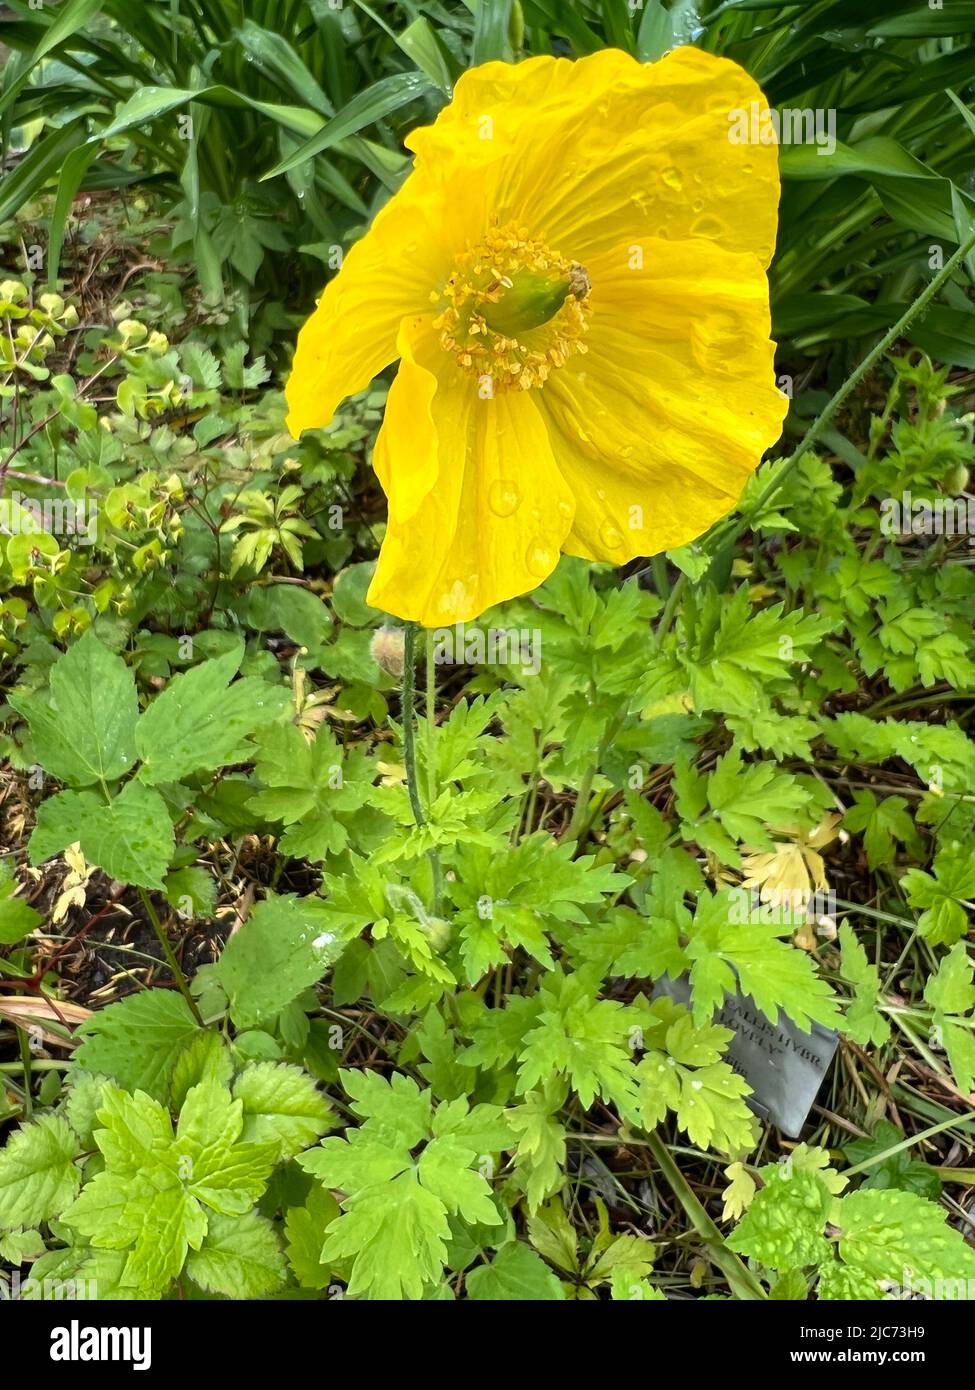 Welsh Poppy - Papaver cambricum - Wald-Scheinmohn - Papaver cambricum Stock Photo